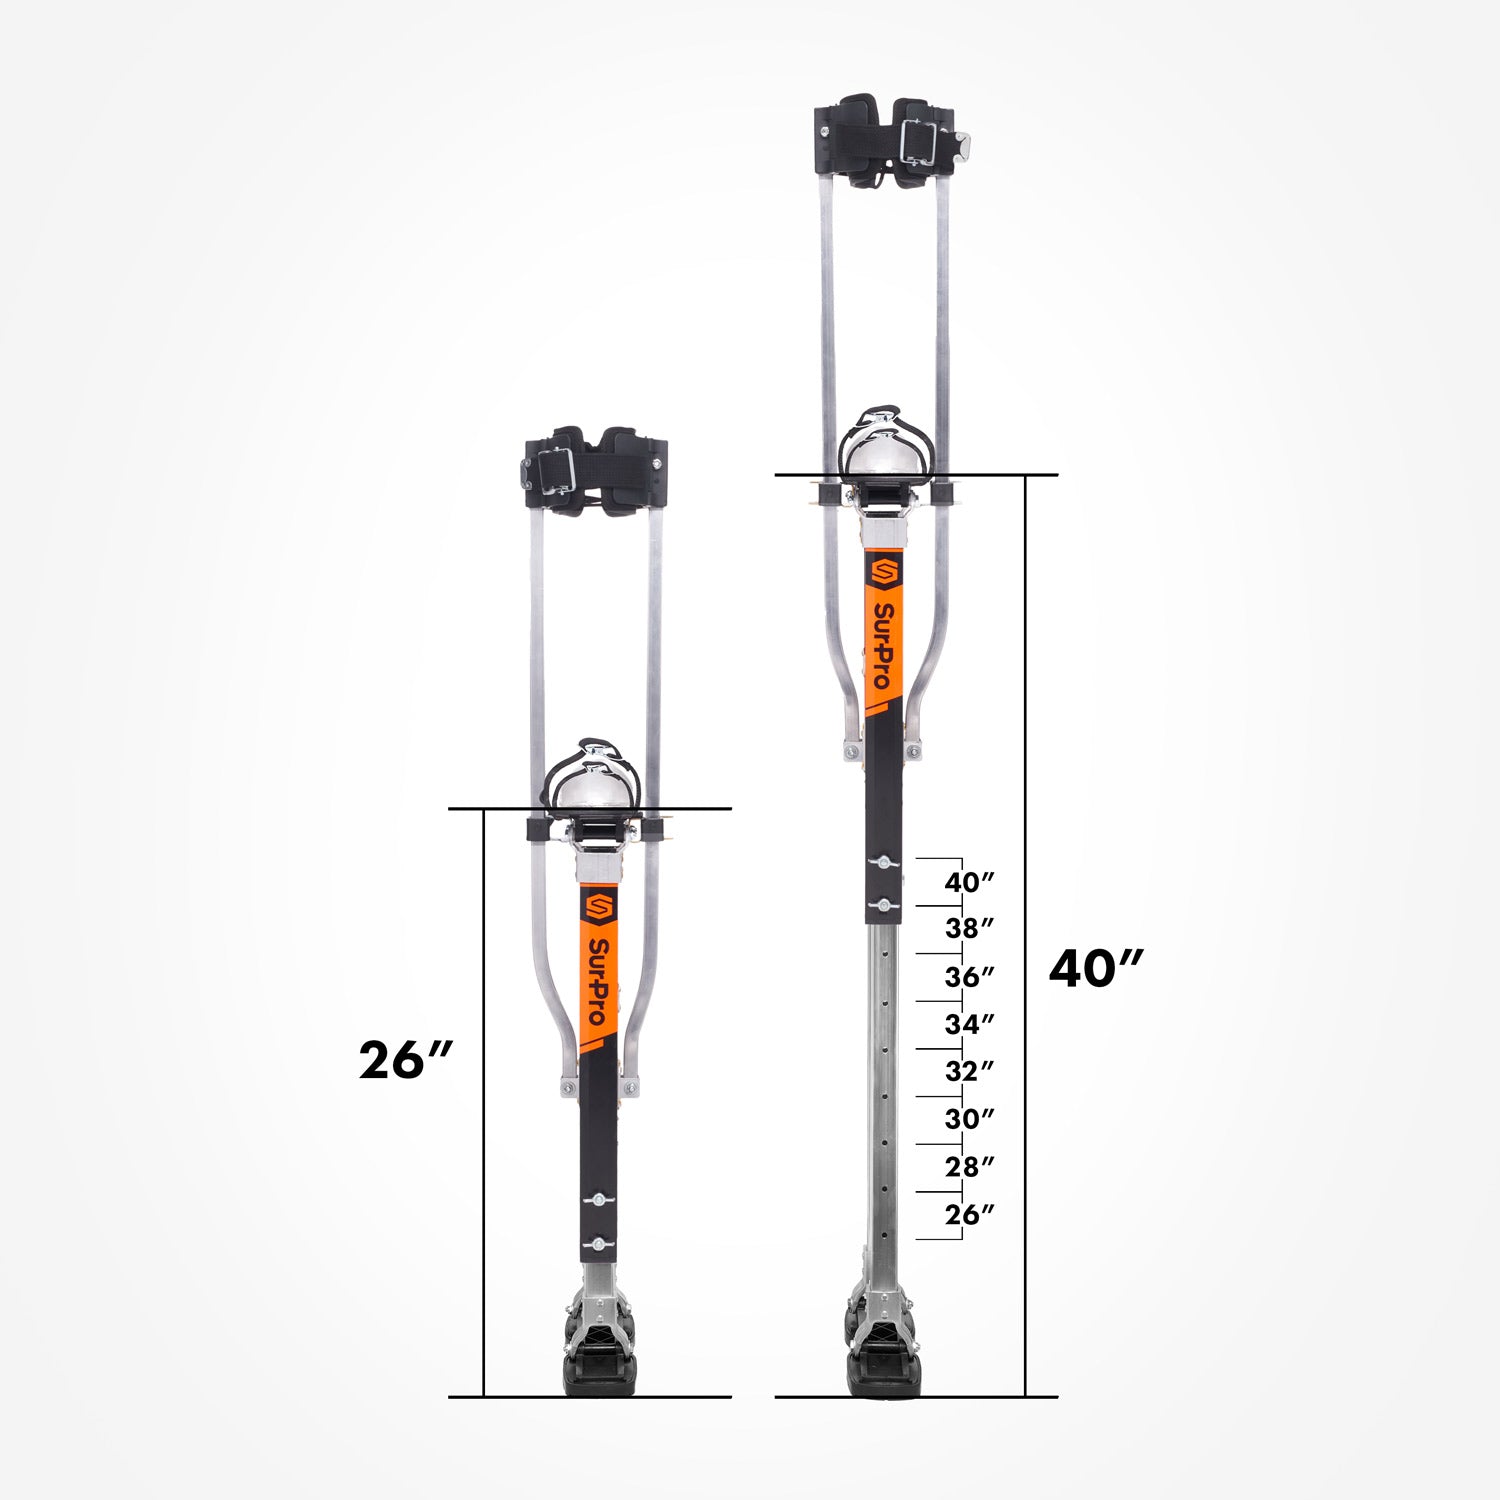 SurPro S2 Magnesium Stilts 26"-40" shown at minimum and maximum height extension.